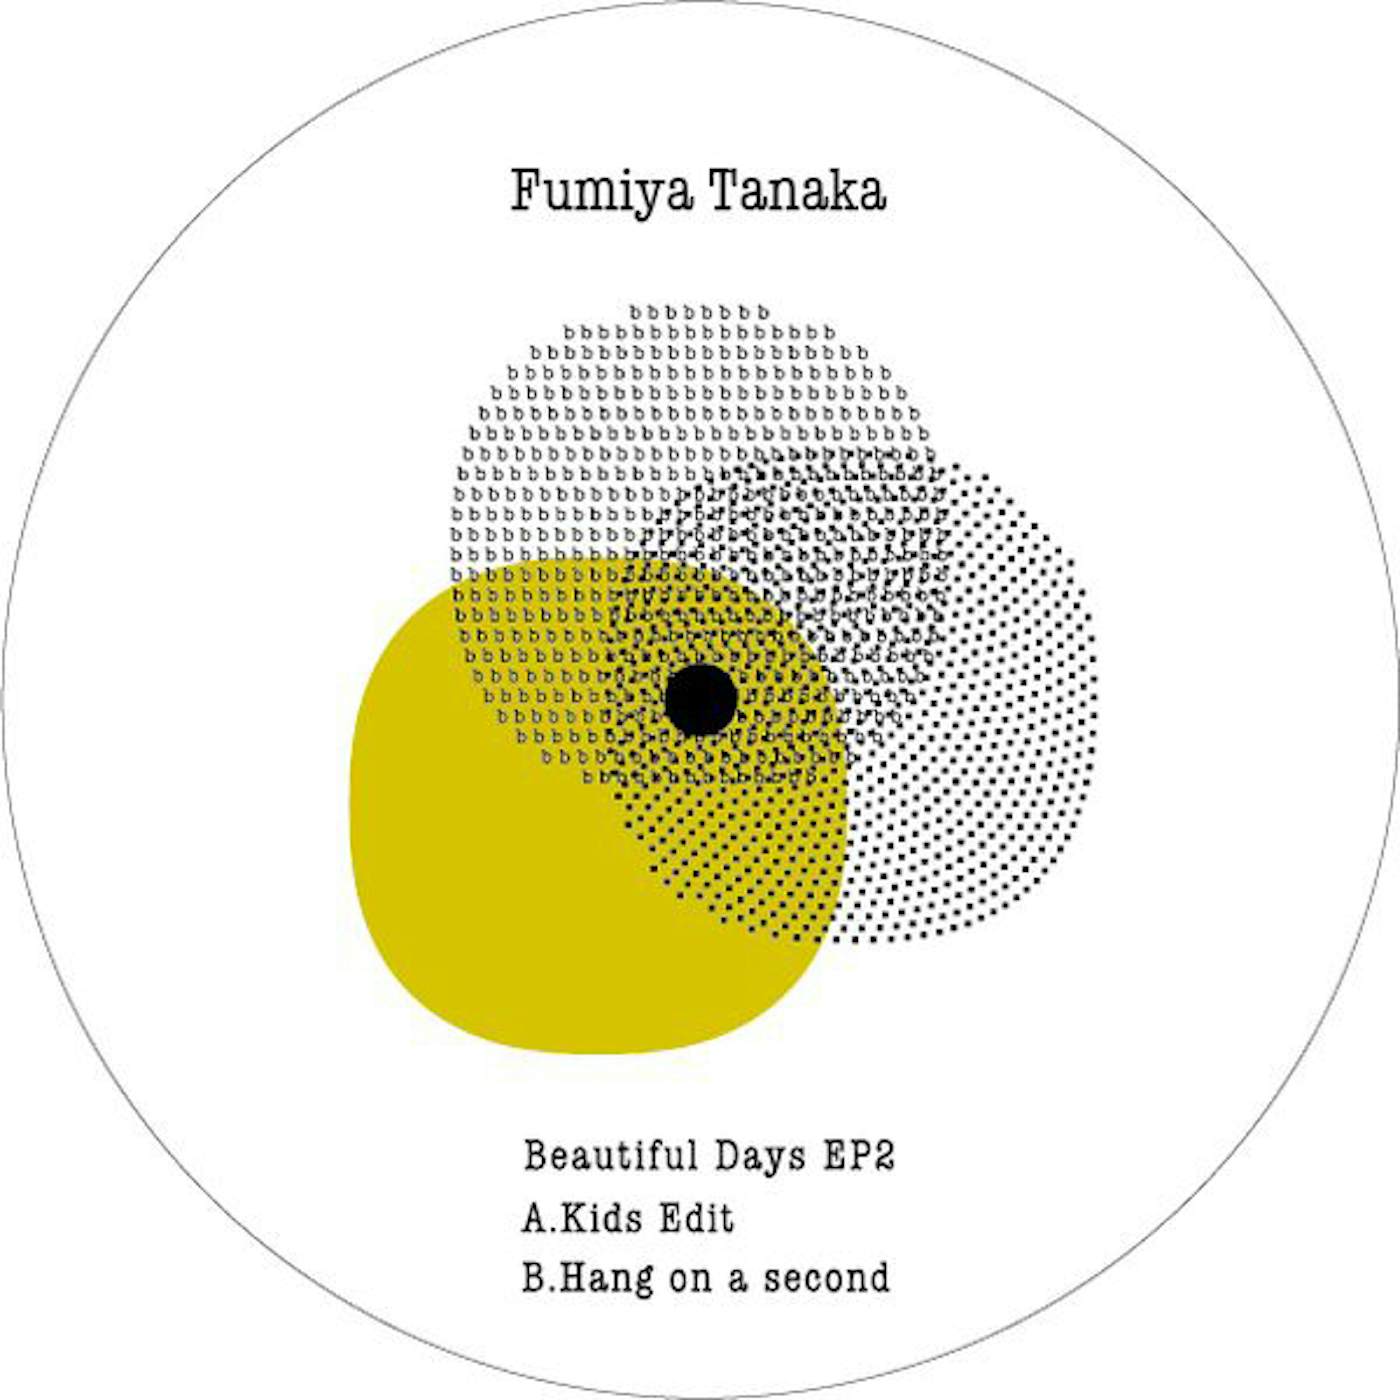 Fumiya Tanaka BEAUTIFUL DAYS EP2 Vinyl Record